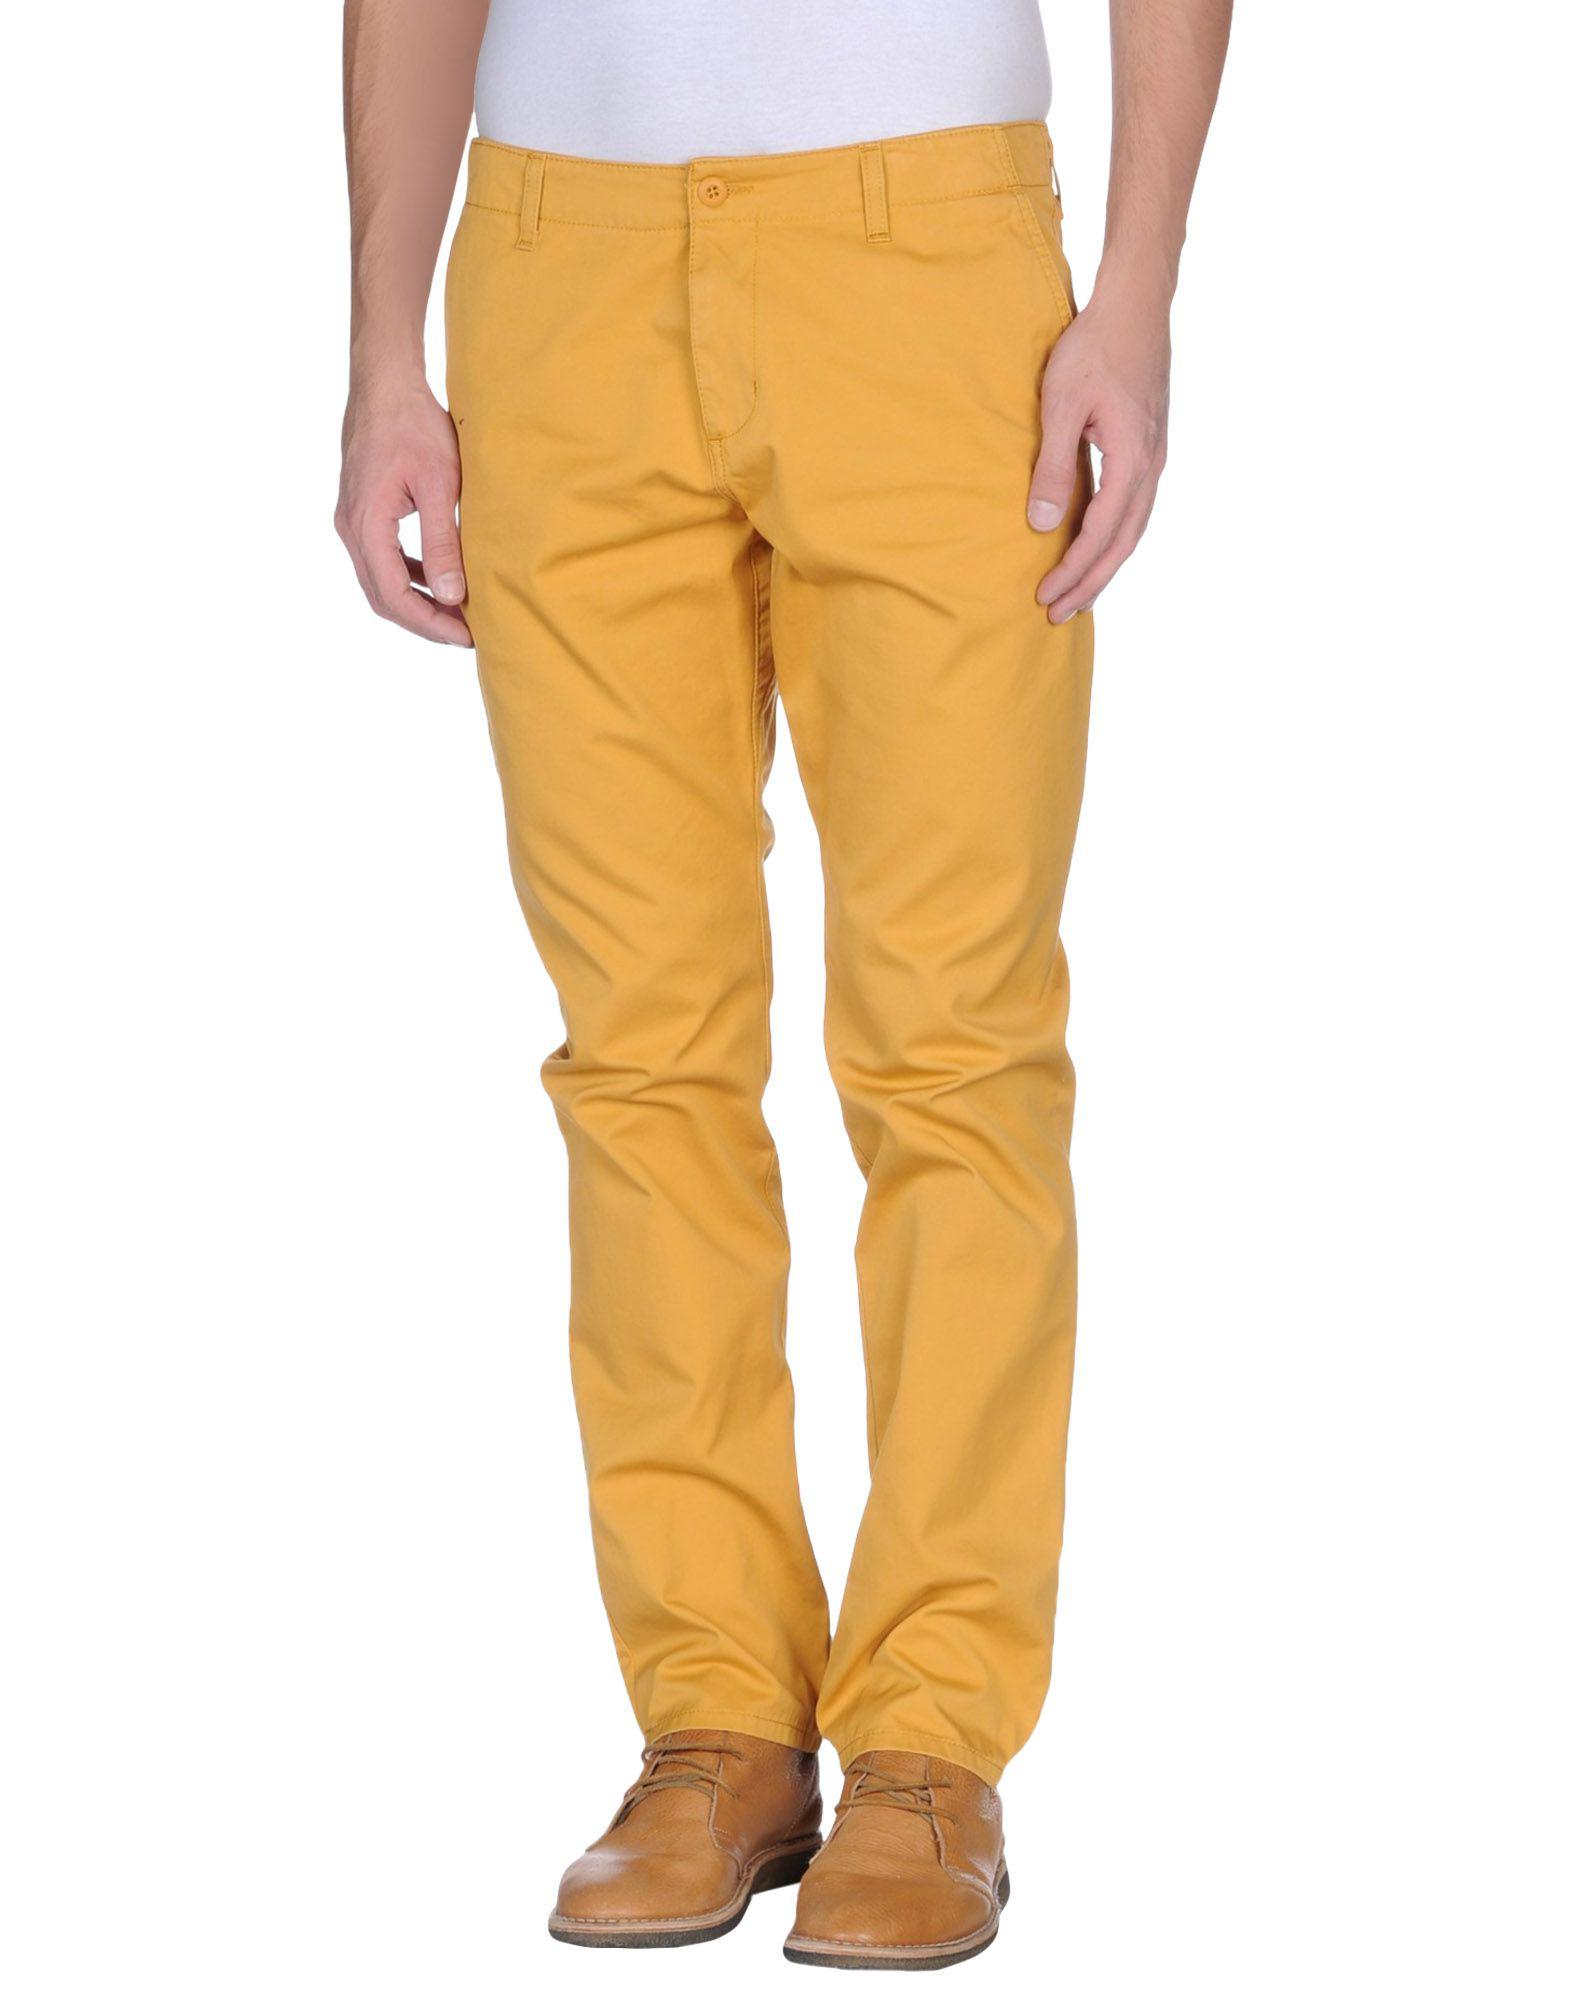 Lyst - Carhartt Casual Pants in Orange for Men